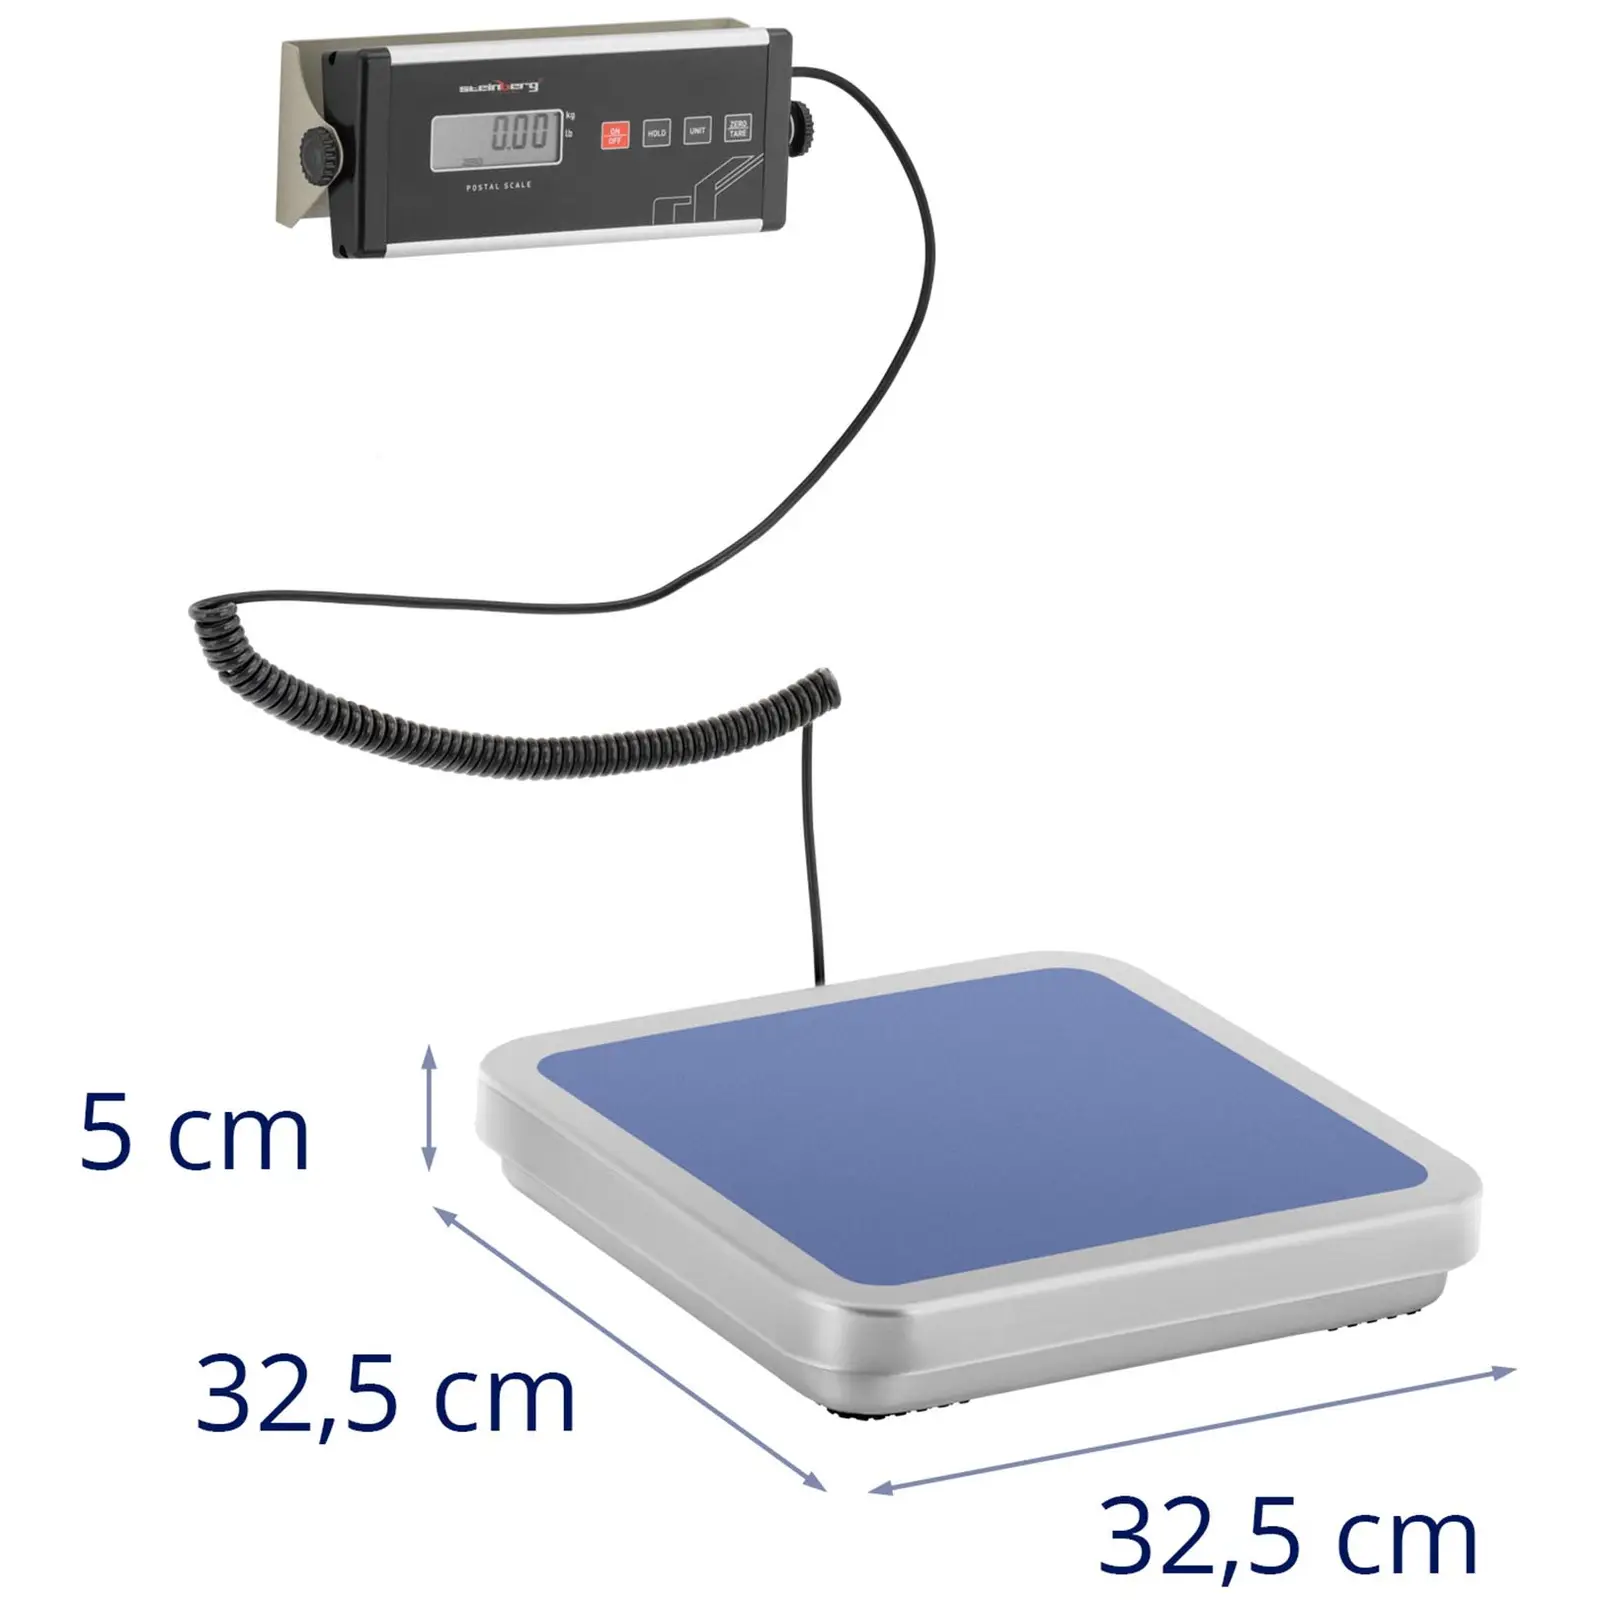 Bilancia pesapacchi - 30 kg / 0,01 kg - 31,5 x 32,5 cm - LCD esterno